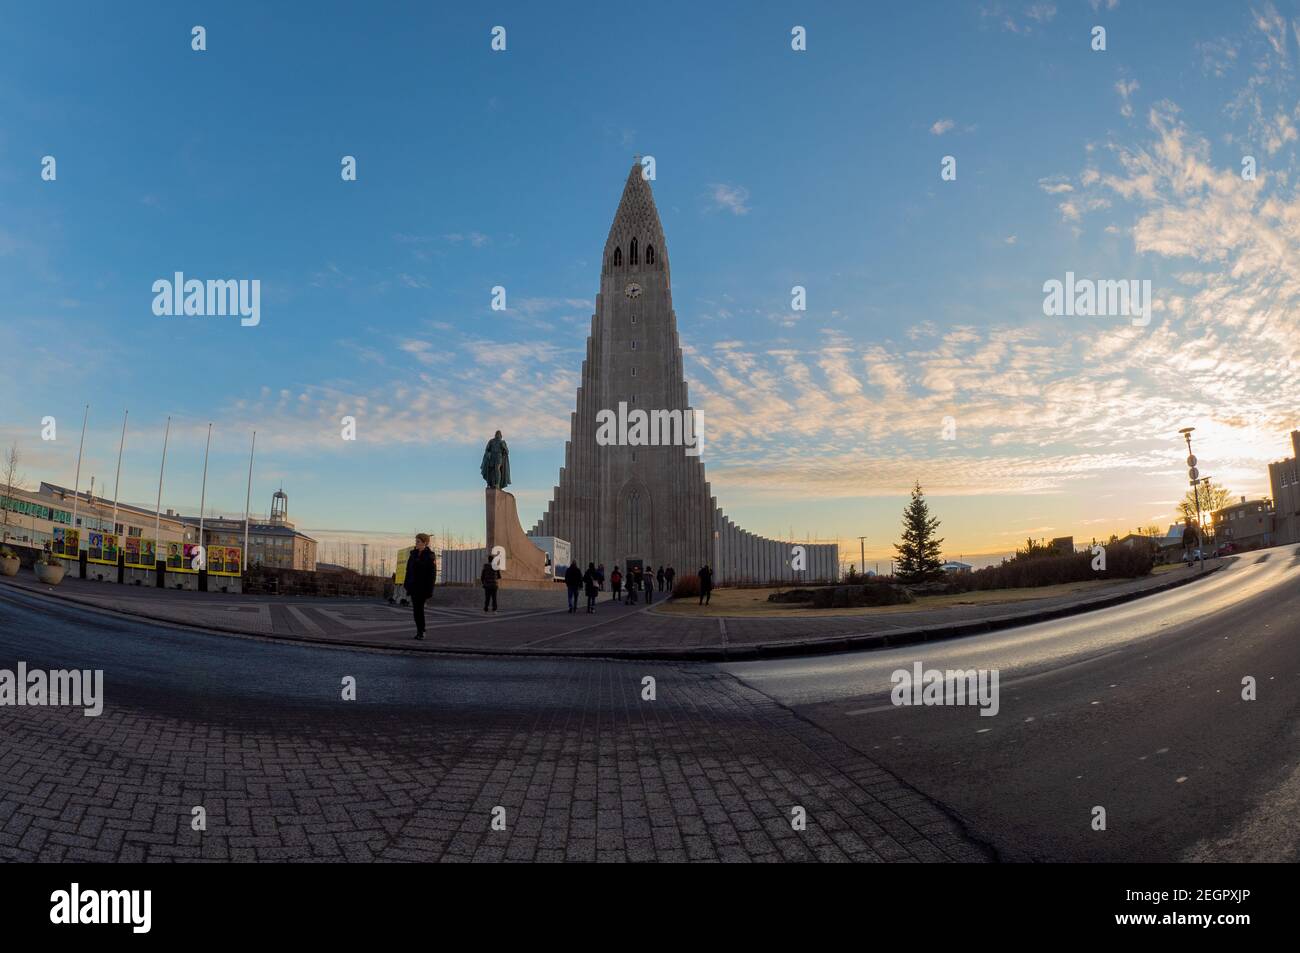 Reykjavik, Iceland - December 5, 2017 - Hallgrimskirkja Cathedral front view with pedestrians walking in front Stock Photo